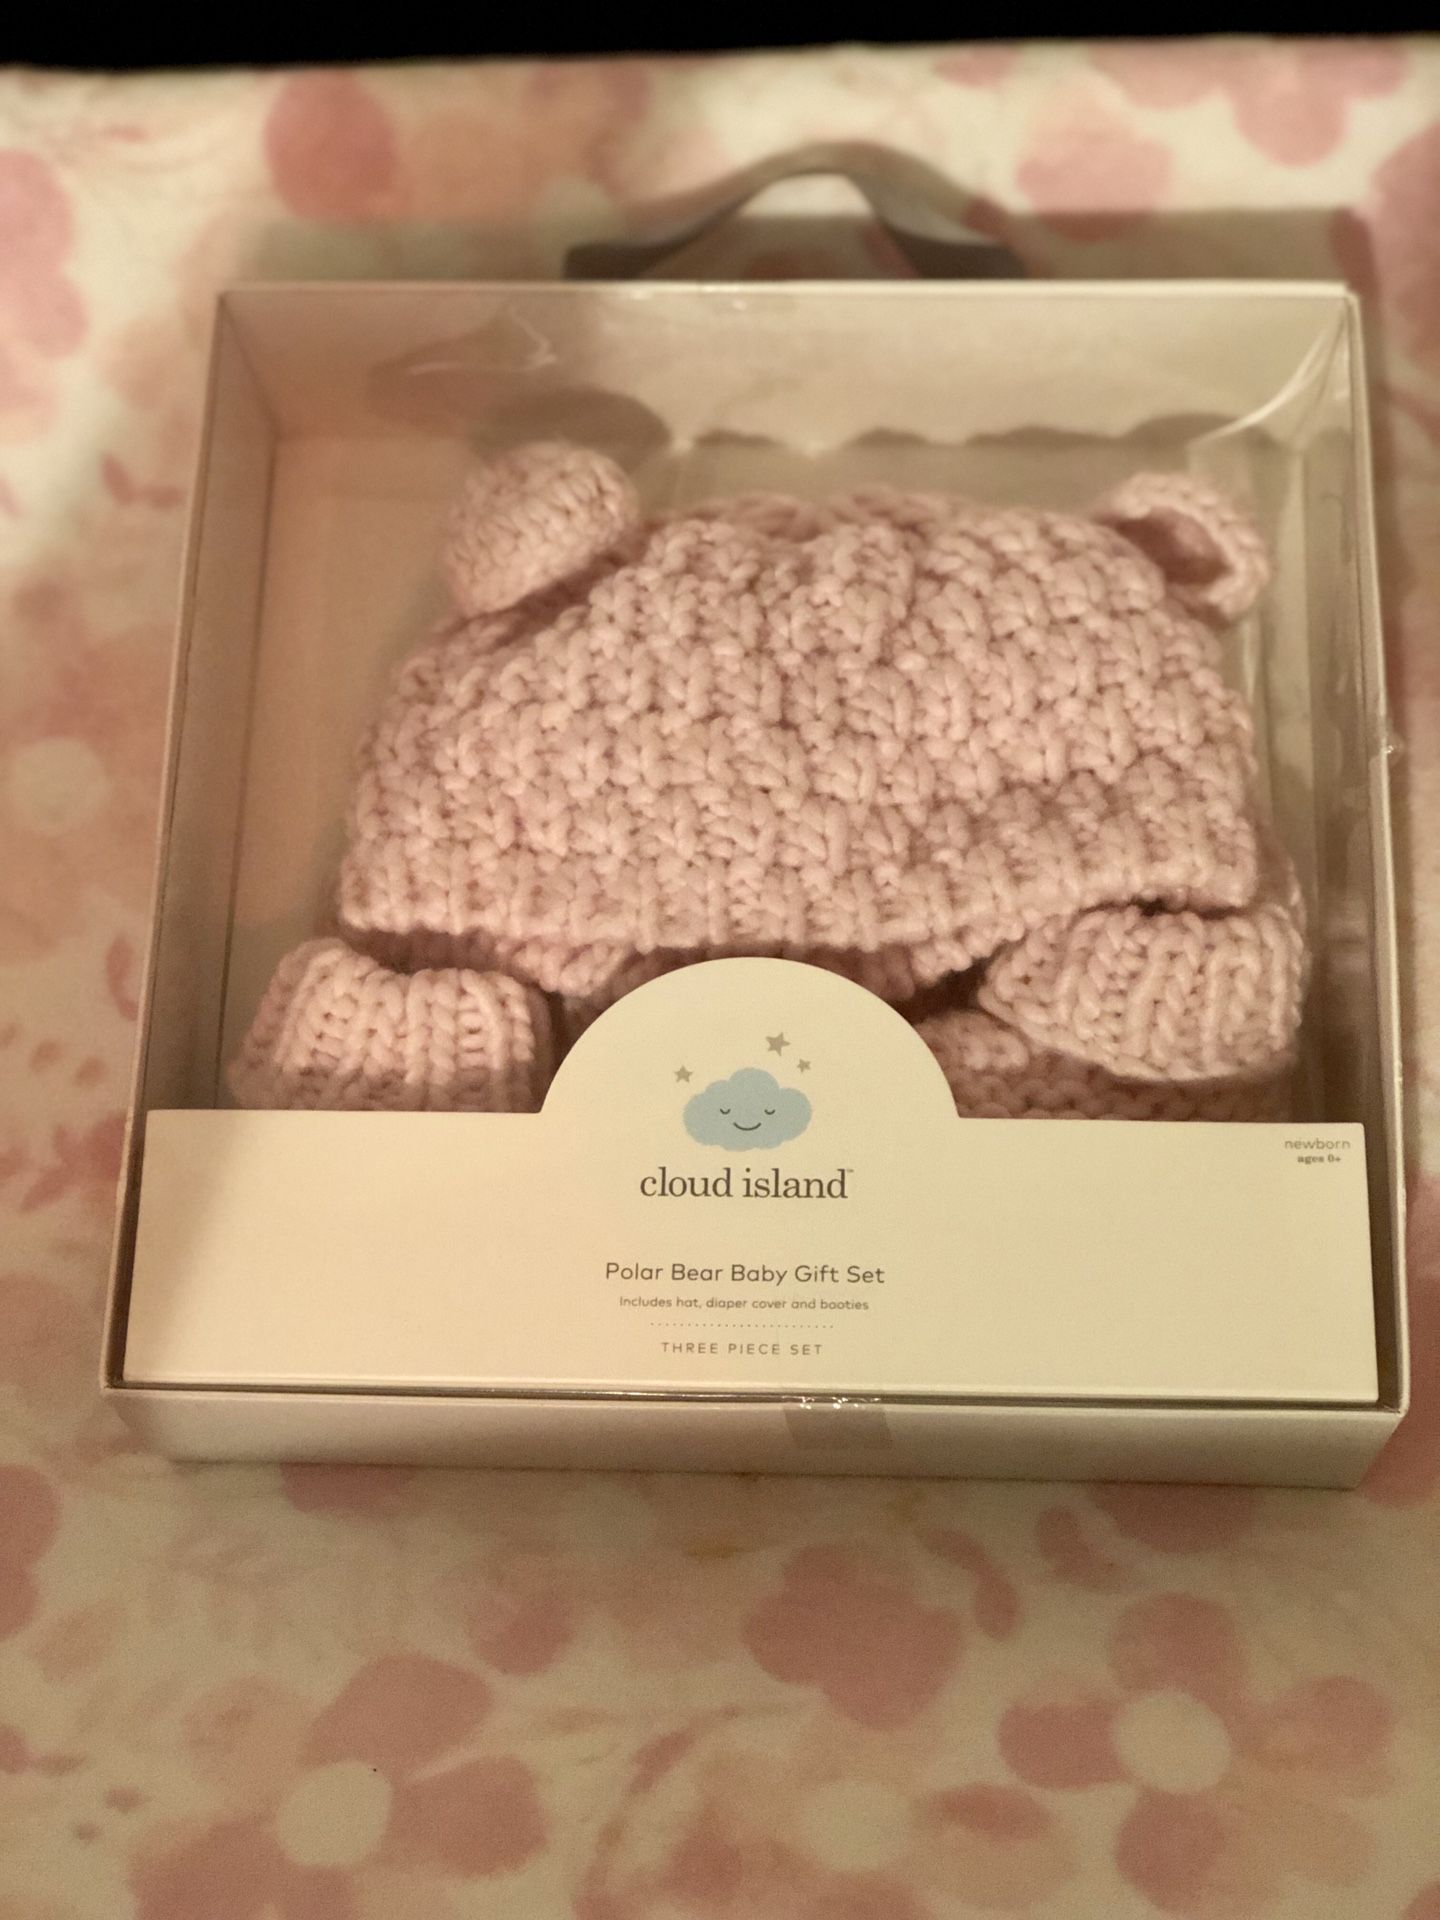 Polar bear baby gift set